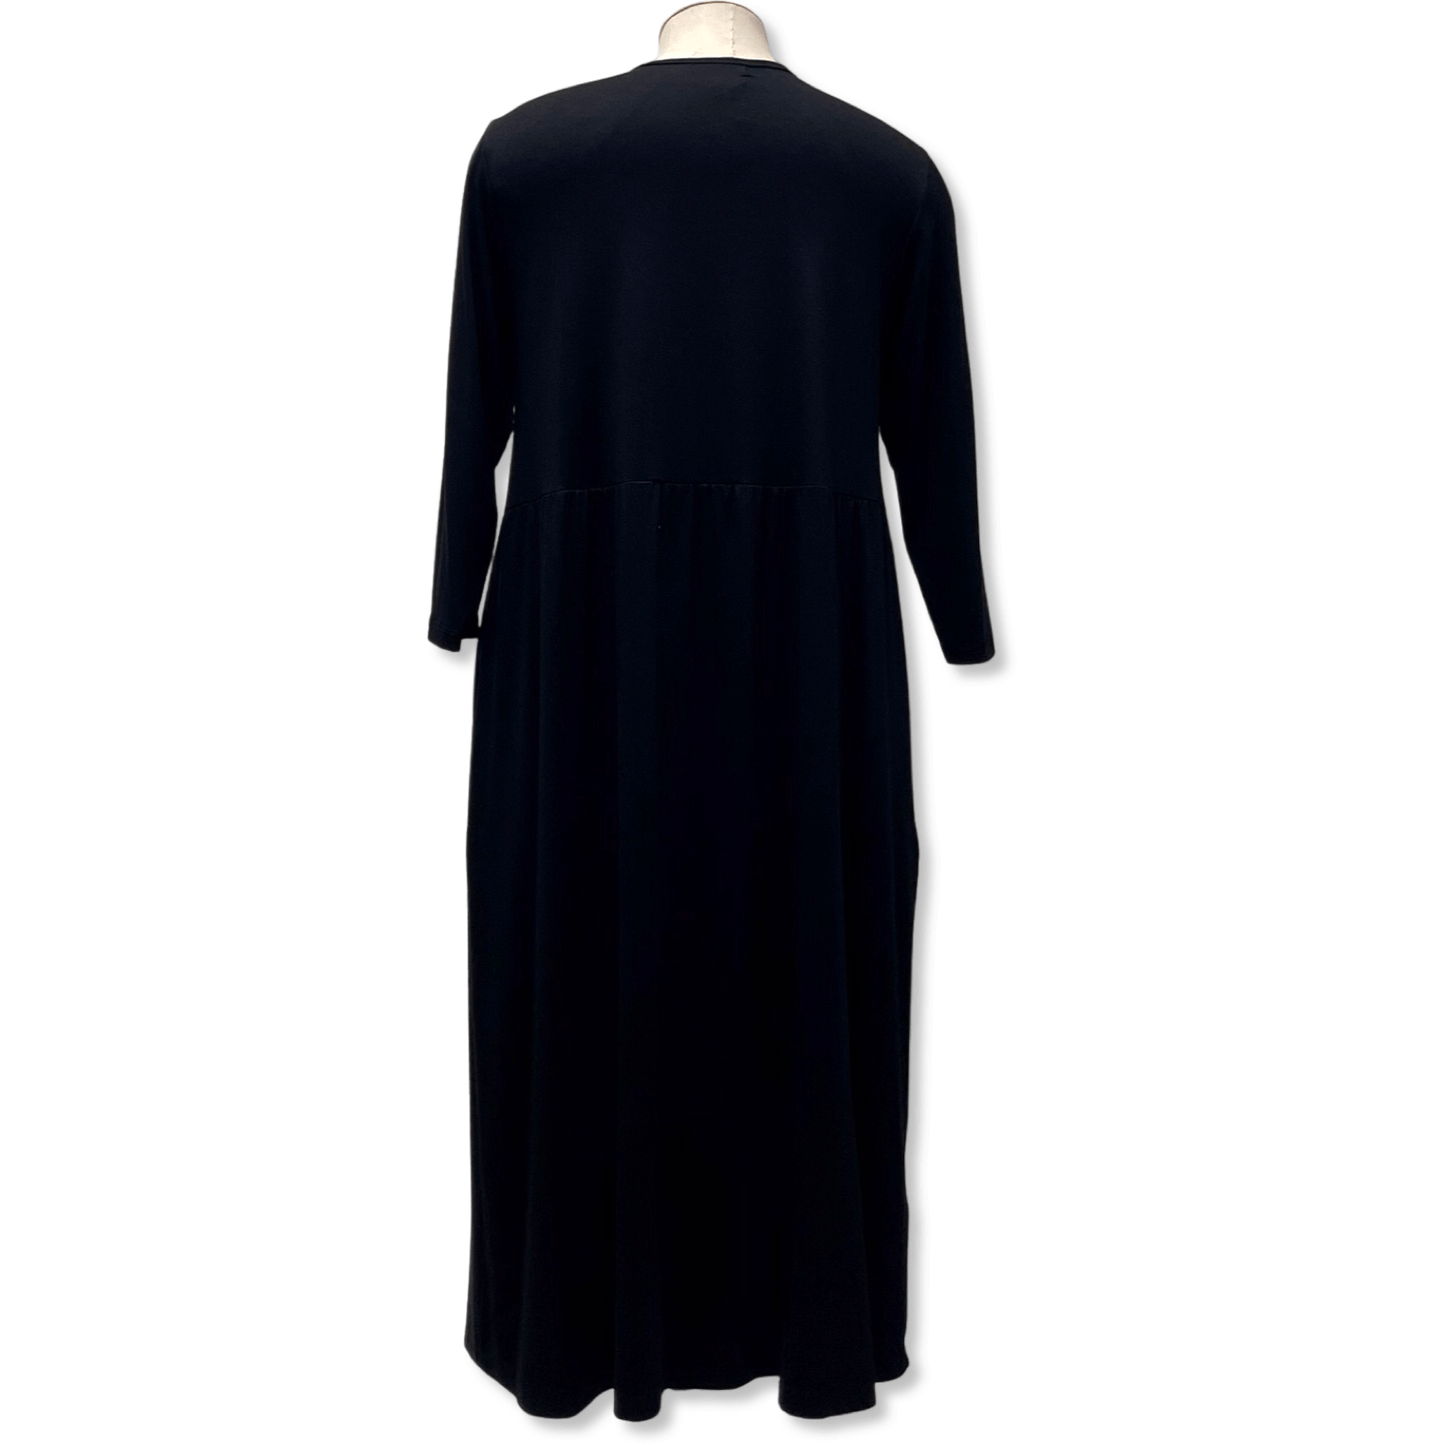 Bloom Clothing NZ,ALL DAY CUDDLES DRESS -Black,$90.00,